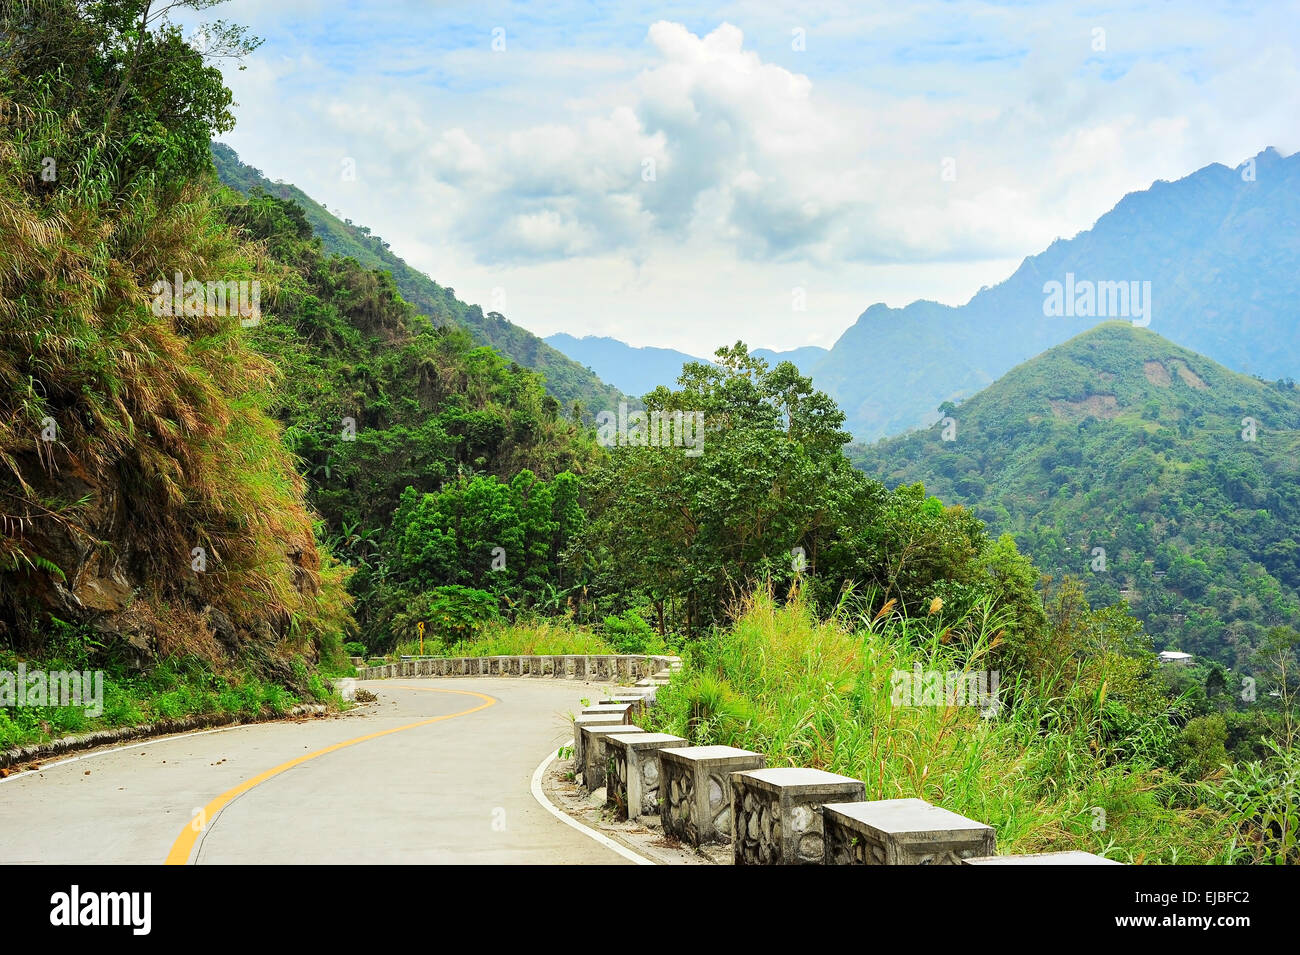 Mountains road, Philippines Stock Photo - Alamy